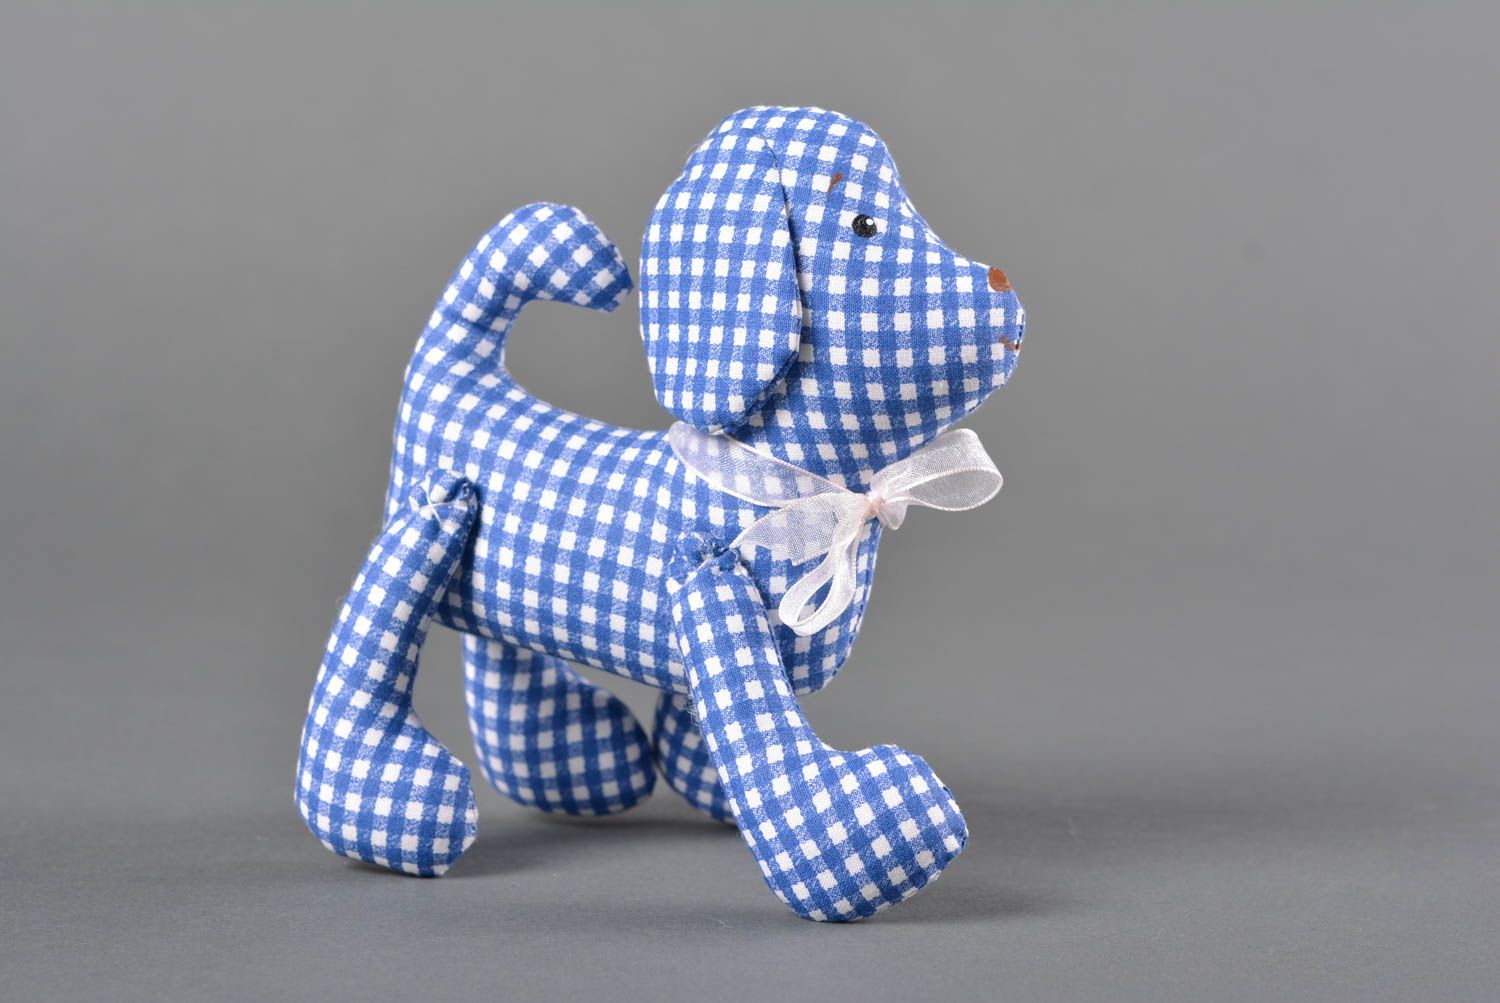 Handmade animal toy for nursery decor ideas soft toy for baby gift ideas photo 1